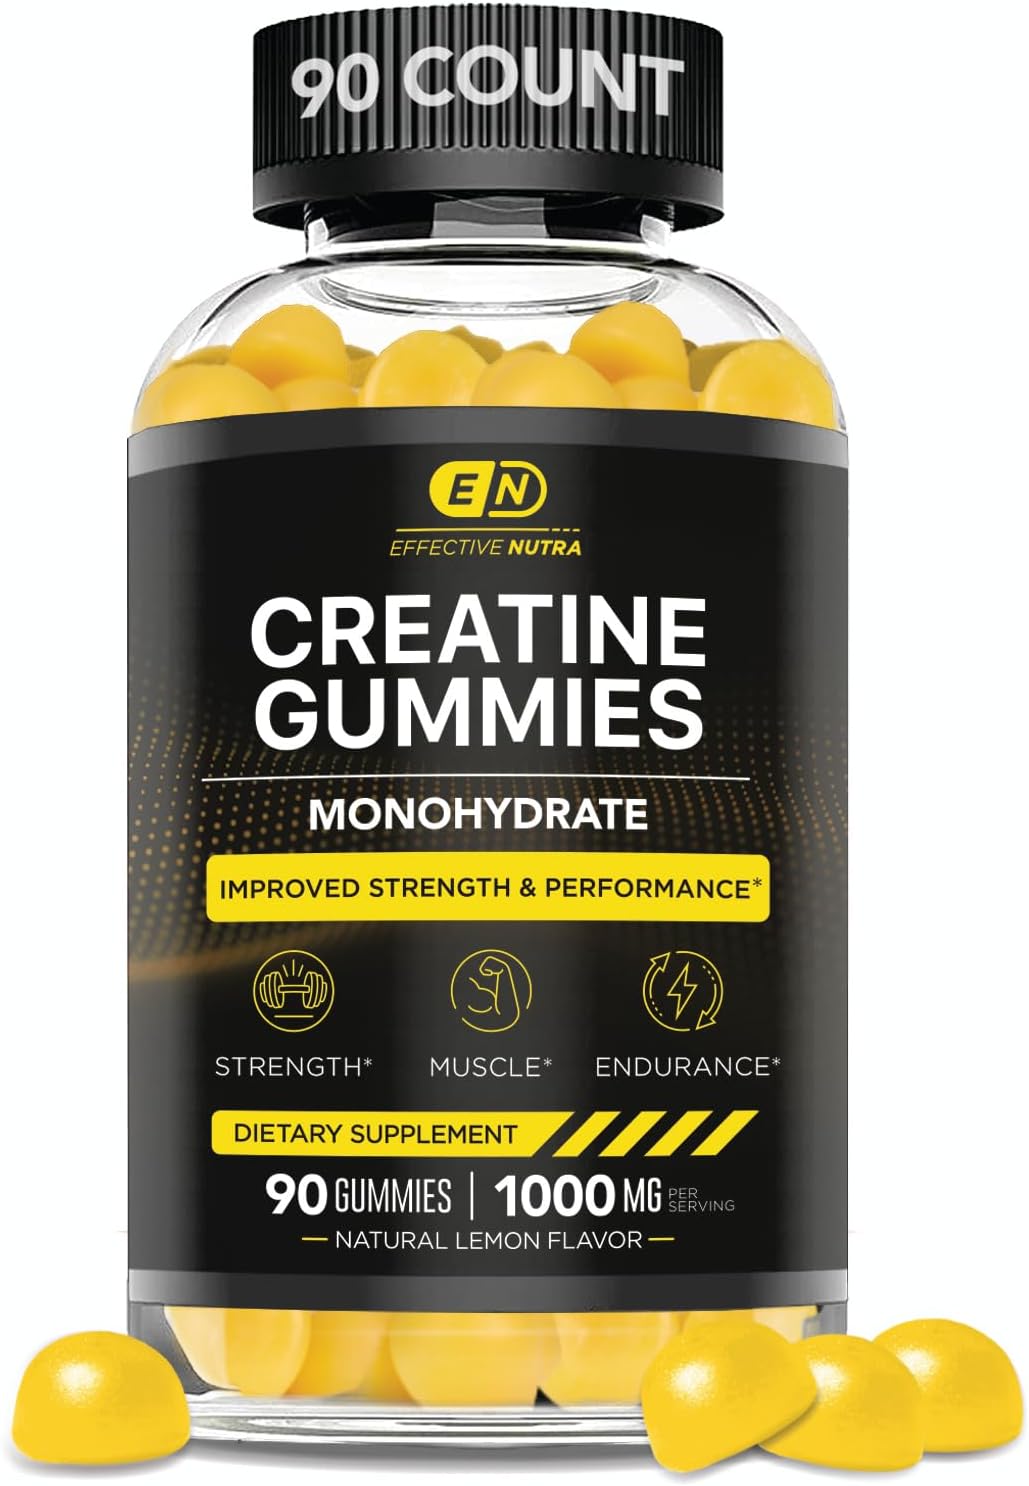 Creatine Gummies for Men & Women - Creatine Monohydrate Gummies for Strength, Muscle, Energy - Natural Lemon Flavor (90ct)